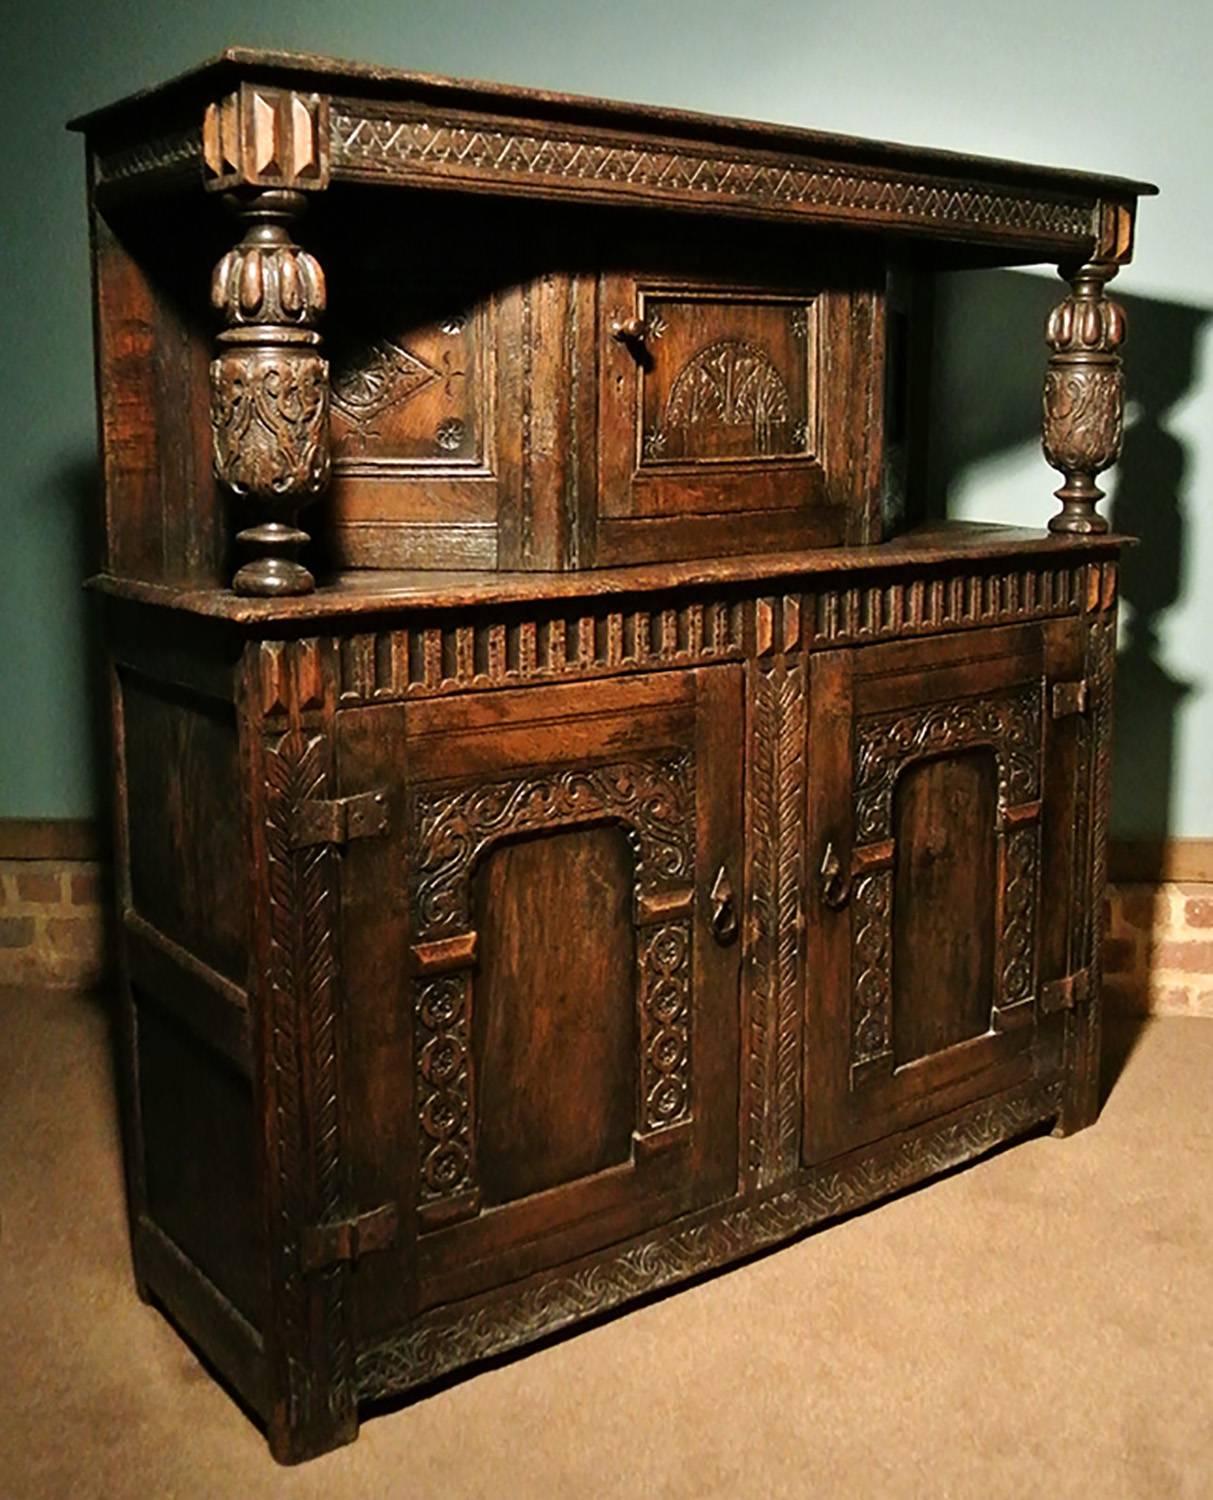 Great Britain (UK) Rare and Original Elizabeth i Court Cupboard, circa 1600